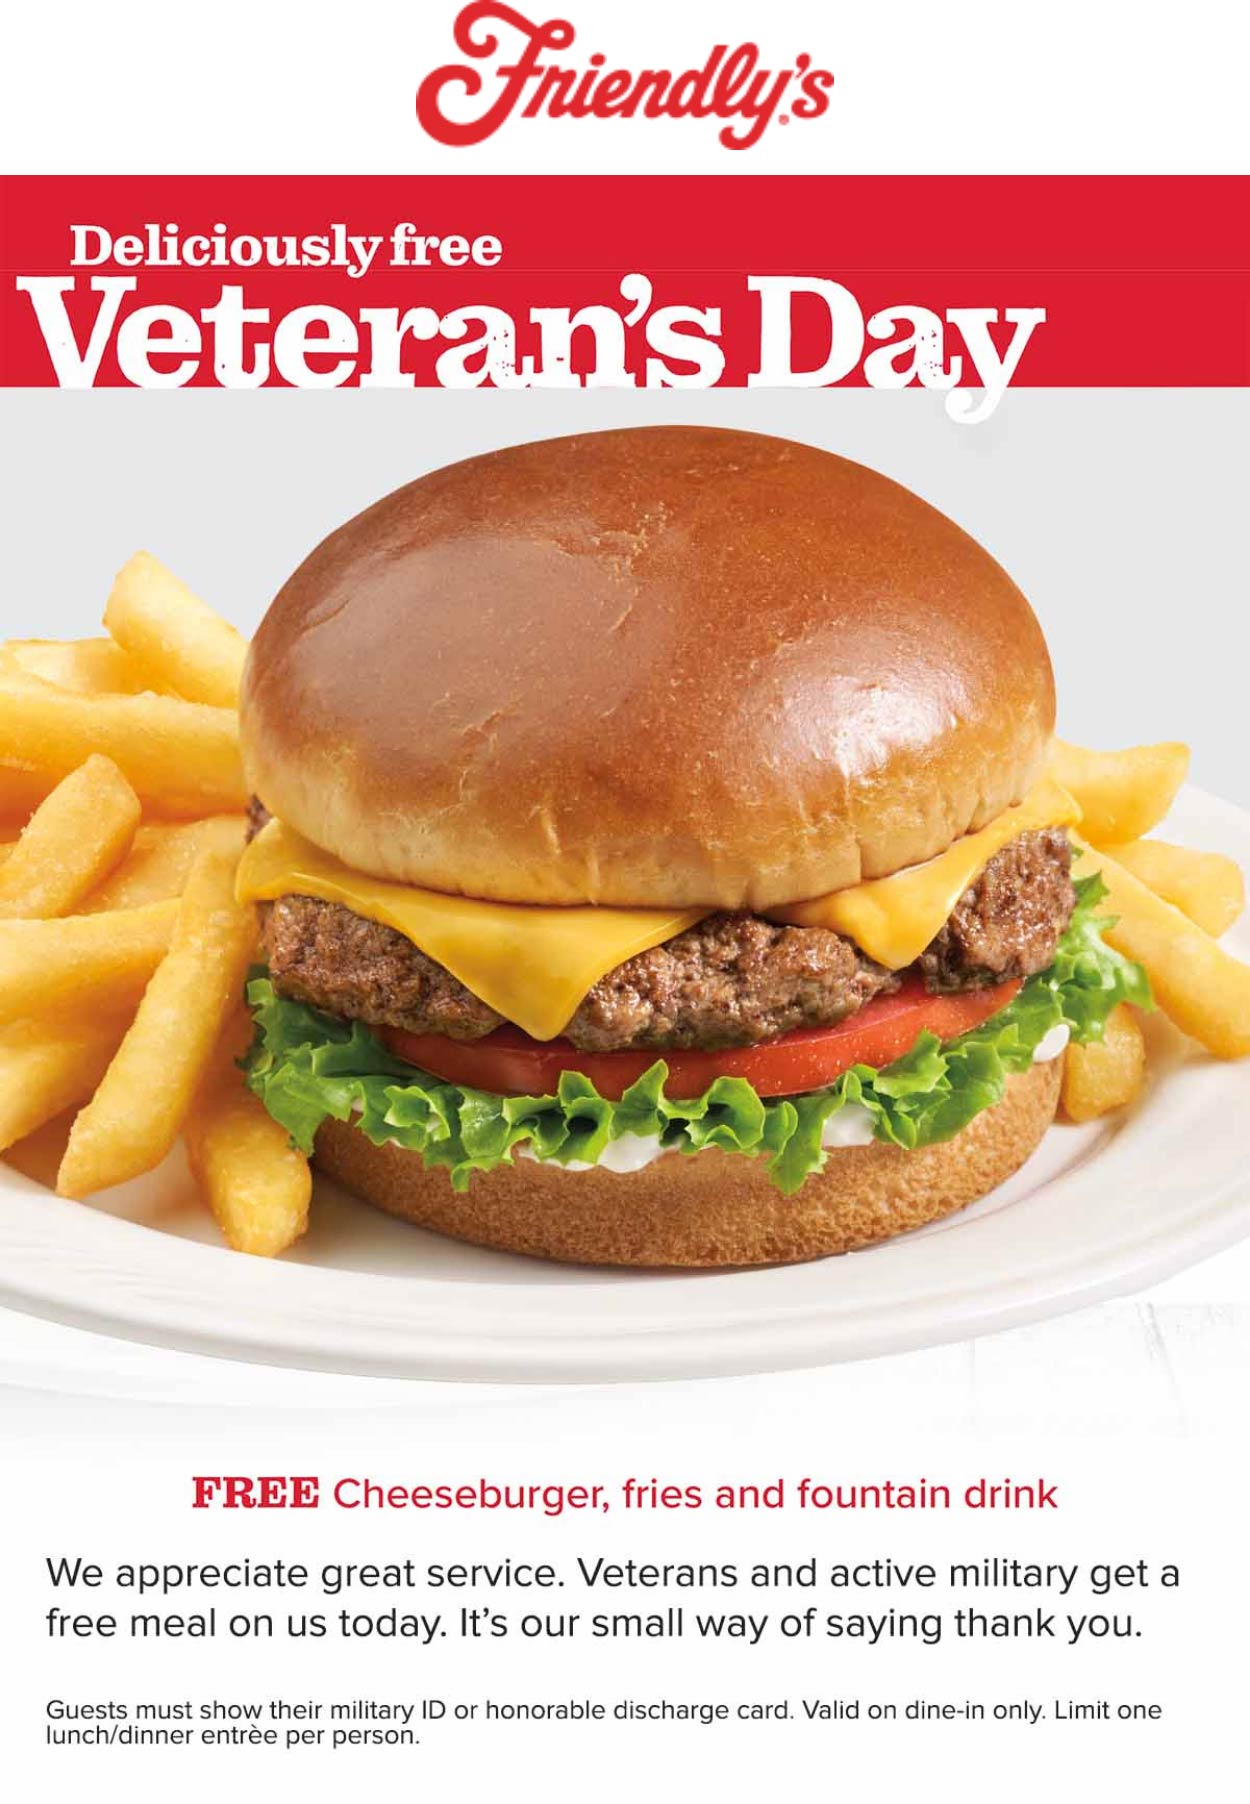 Friendlys restaurants Coupon  Free cheeseburger + fries + drink for veterans & military today at Friendlys #friendlys 